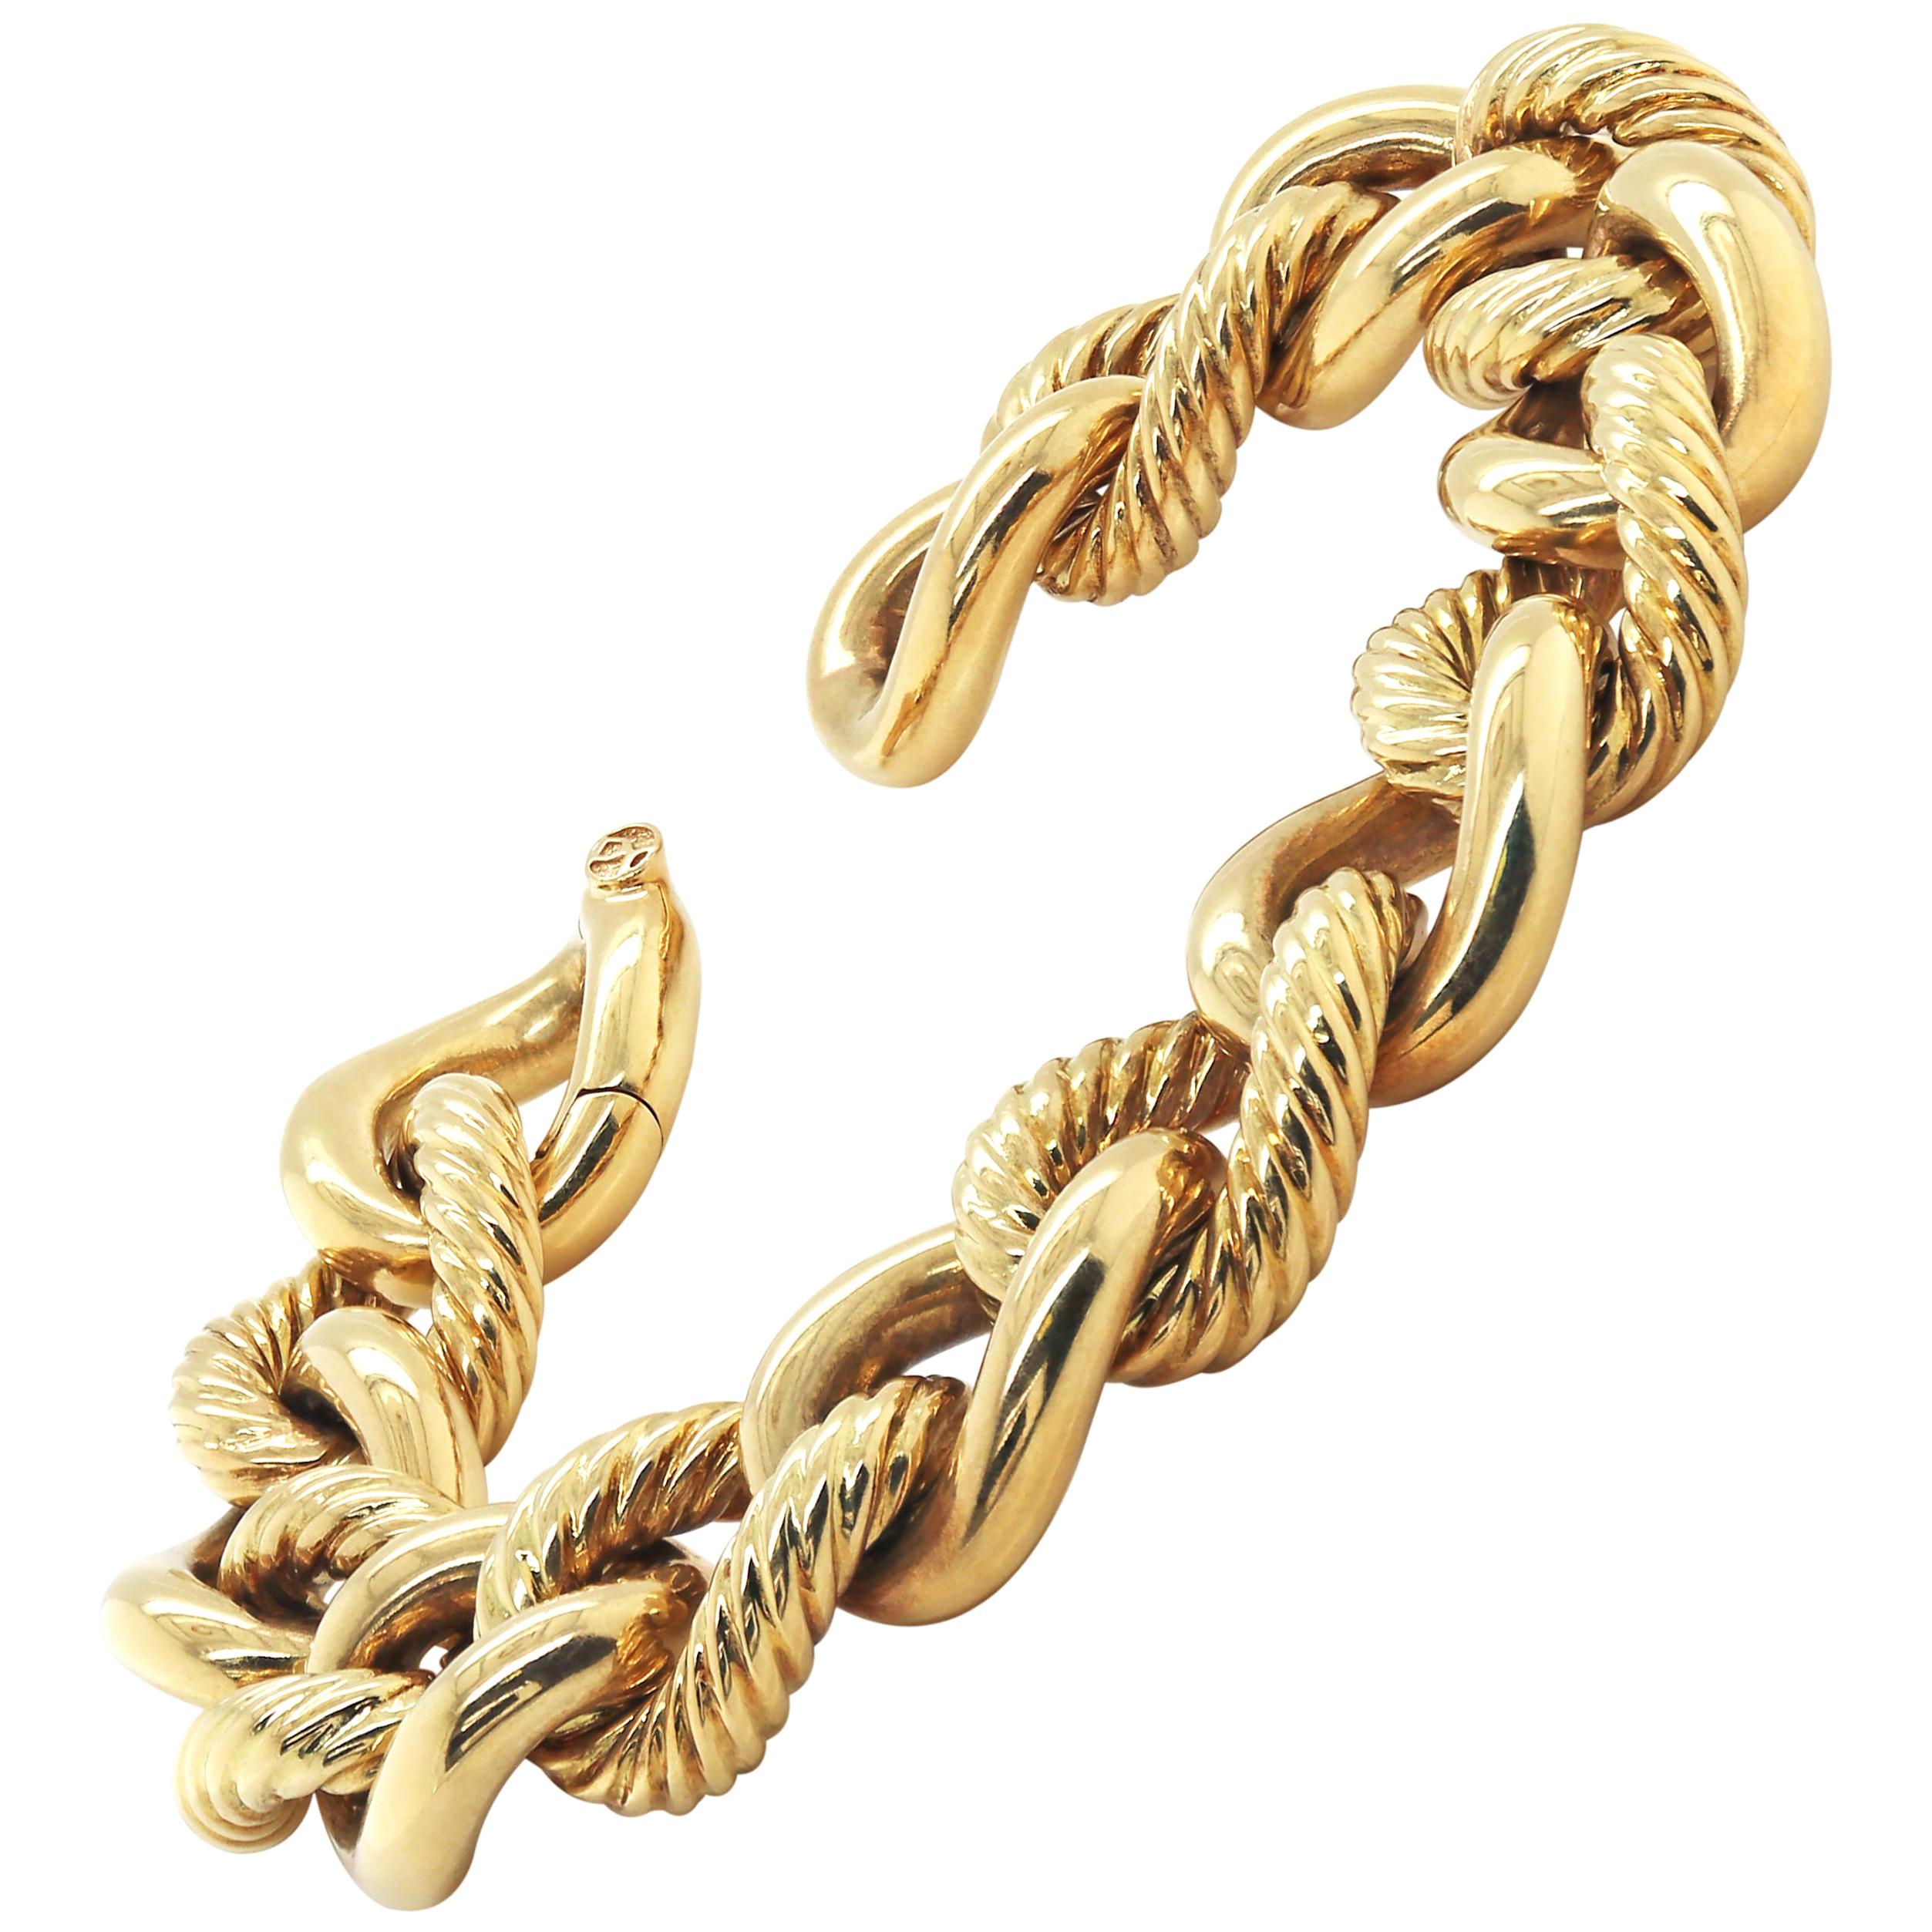 David Yurman 'Belmont' Curb Link 18 Carat Yellow Gold Bracelet